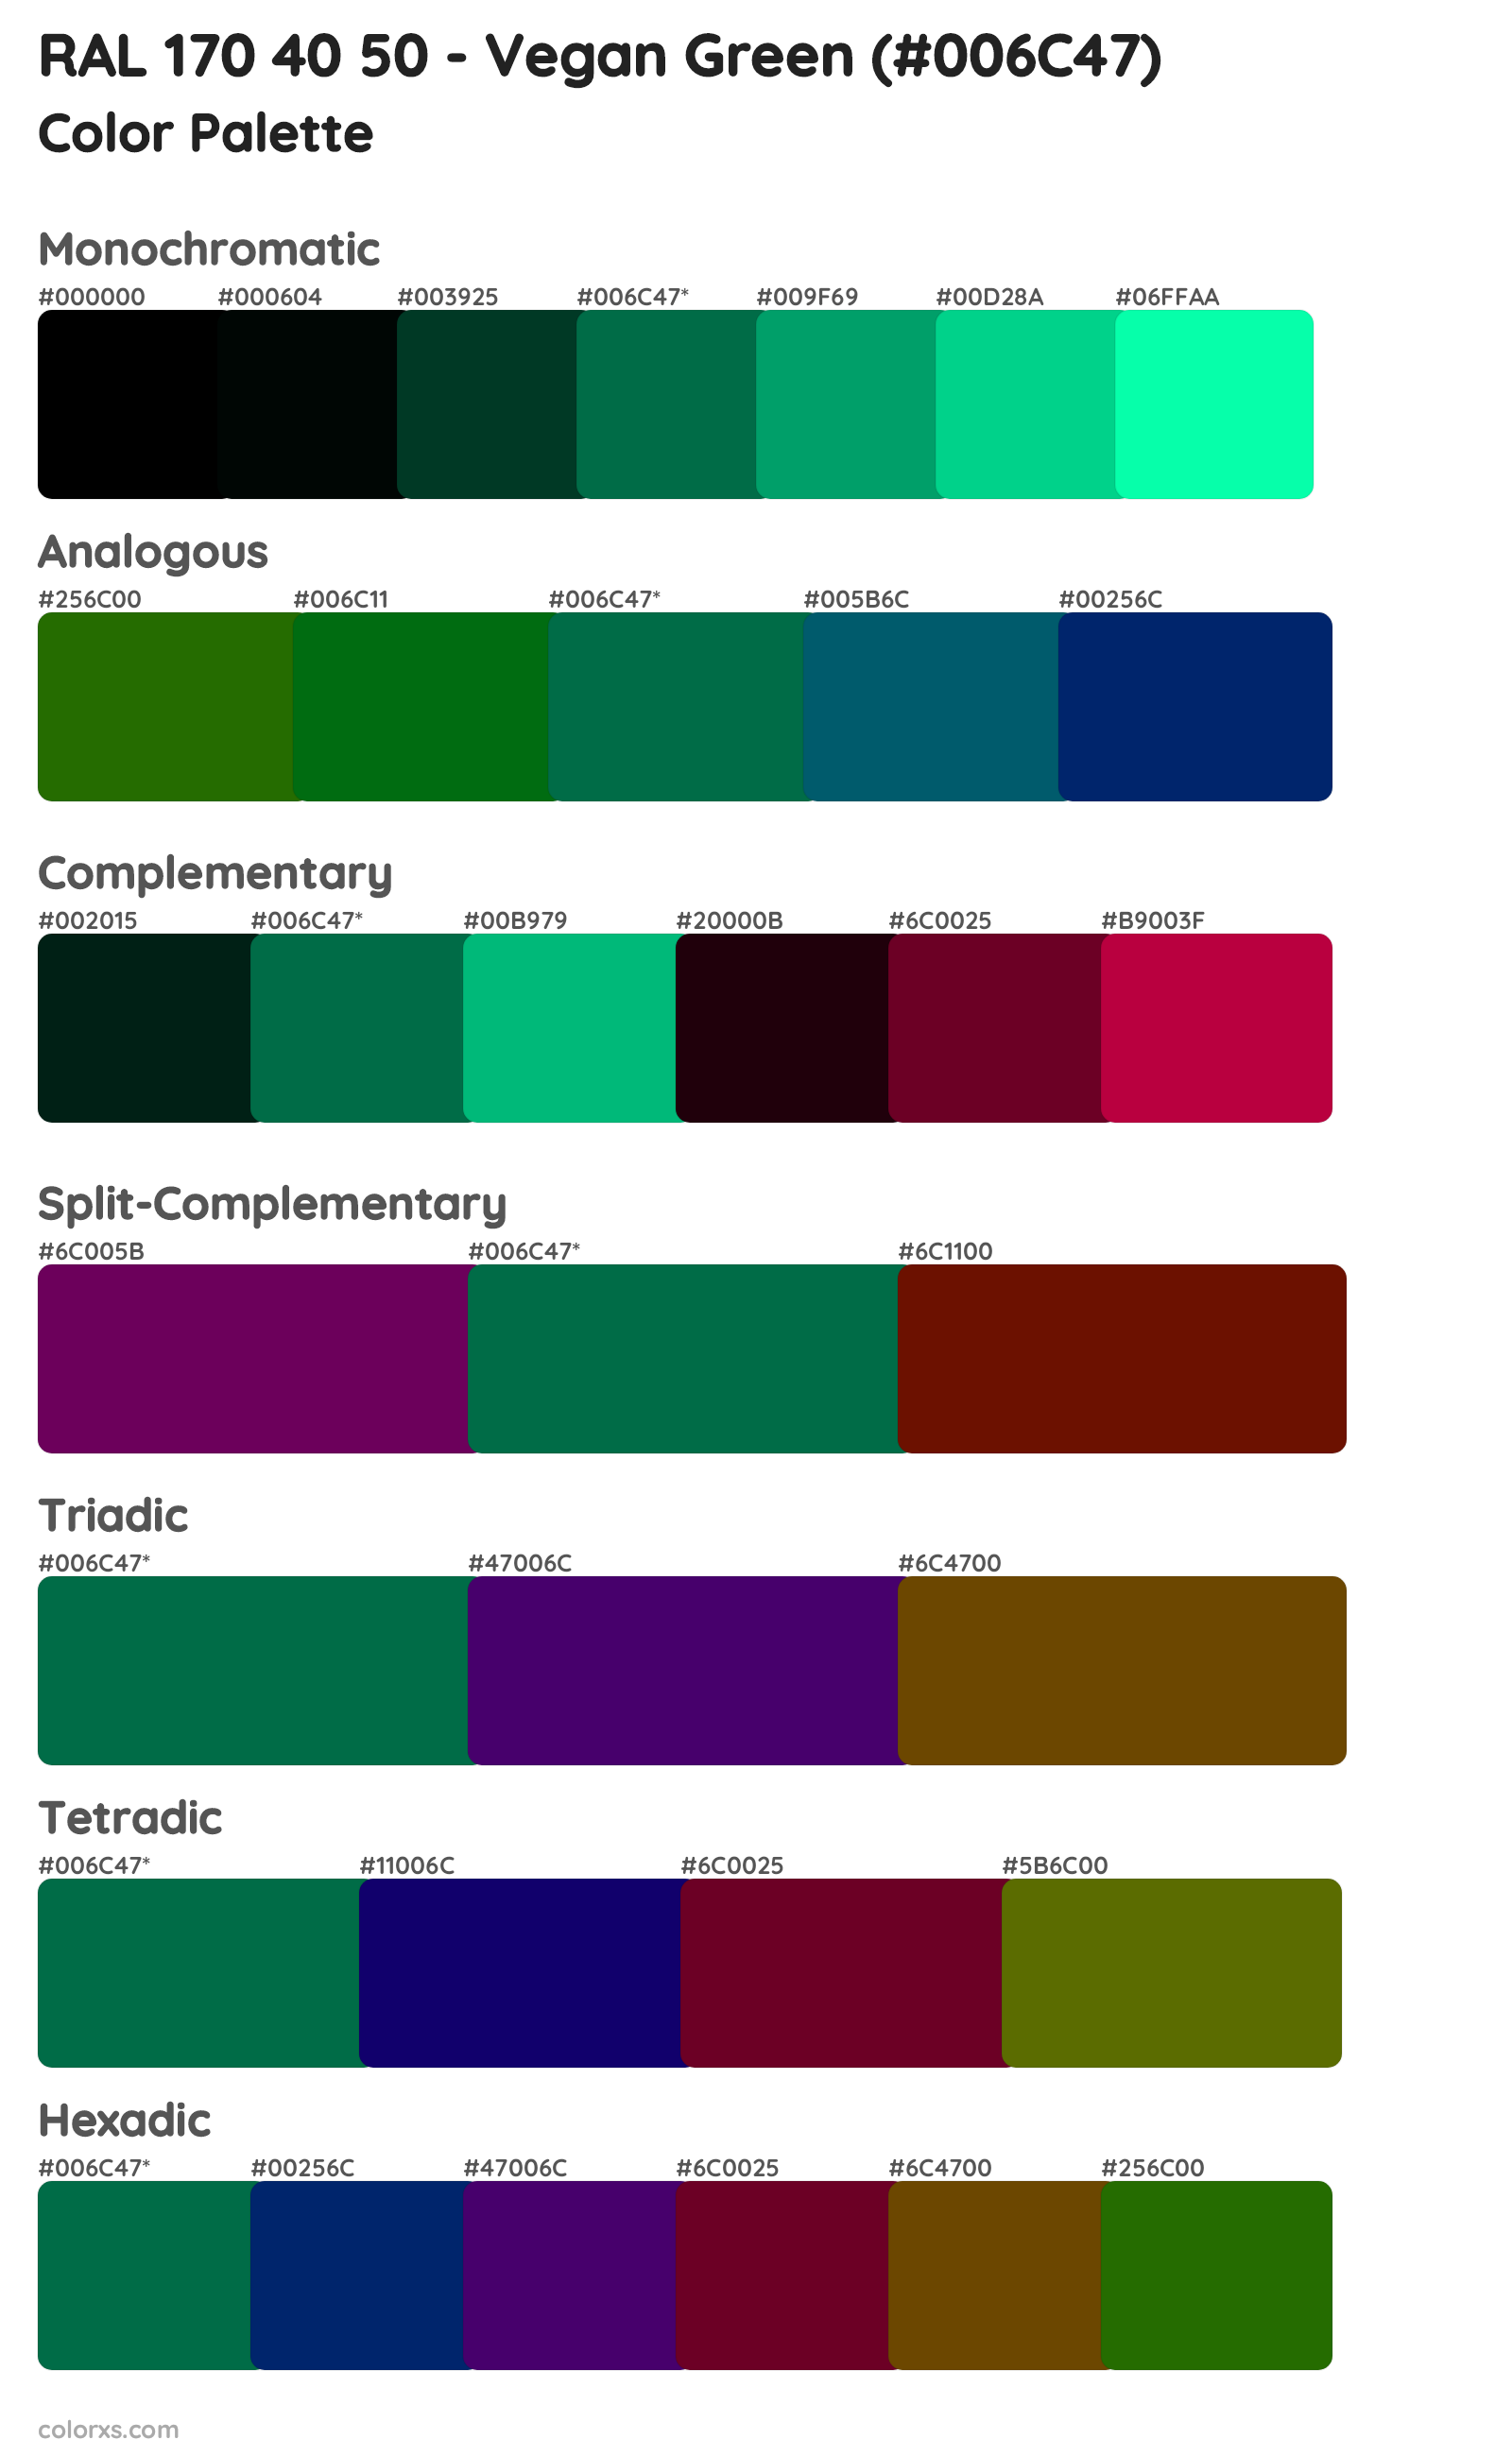 RAL 170 40 50 - Vegan Green Color Scheme Palettes